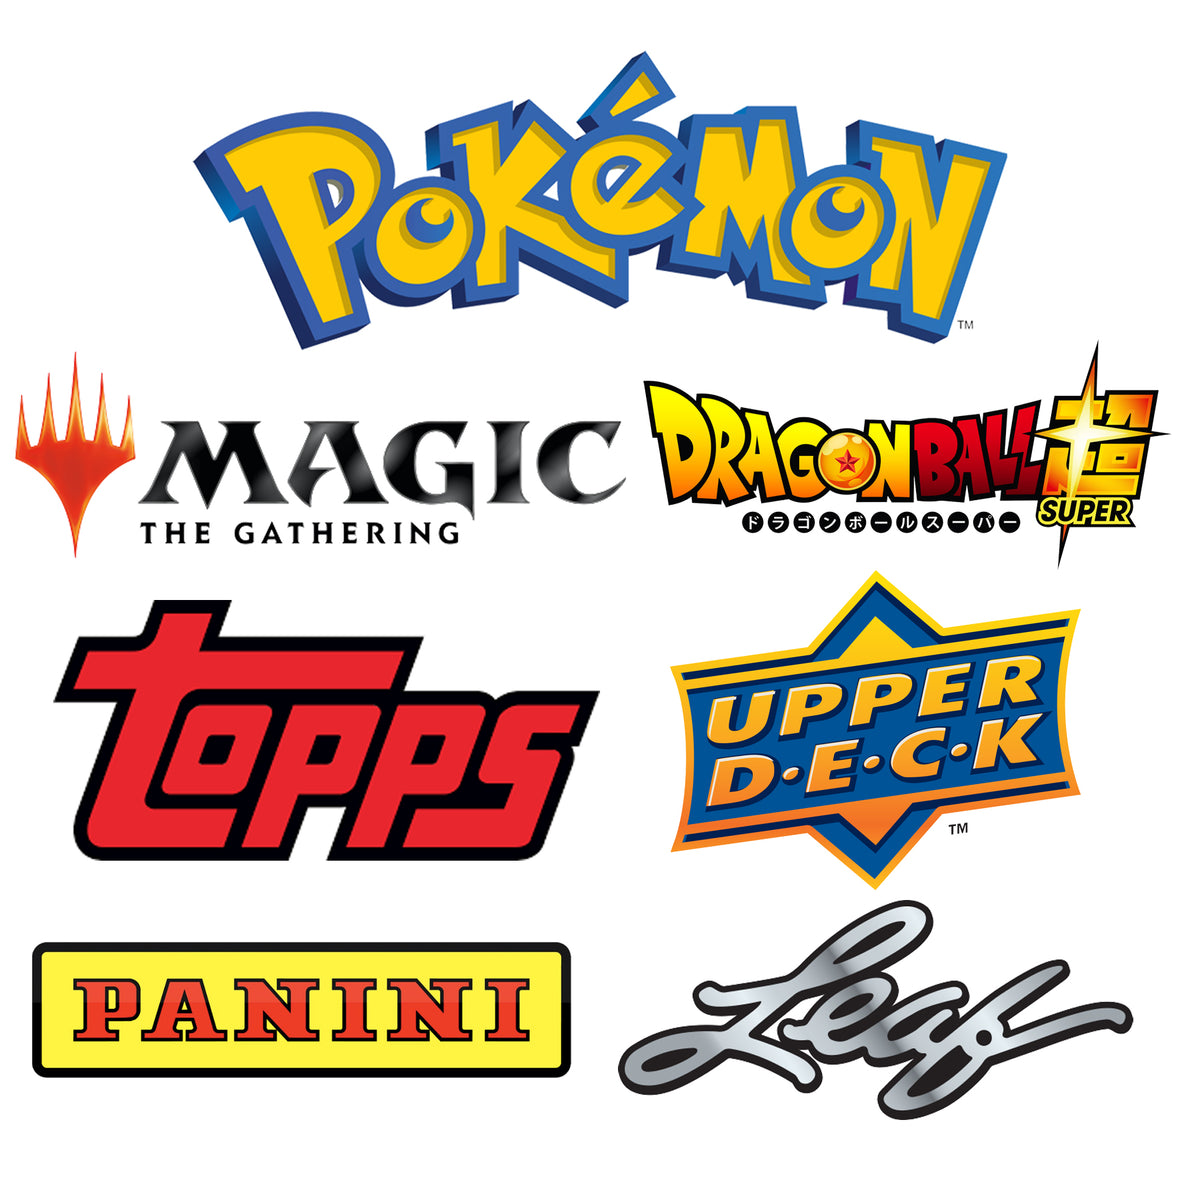 Pokémon TCG: Lucario ex Battle Deck – Lake Hartwell Collectibles